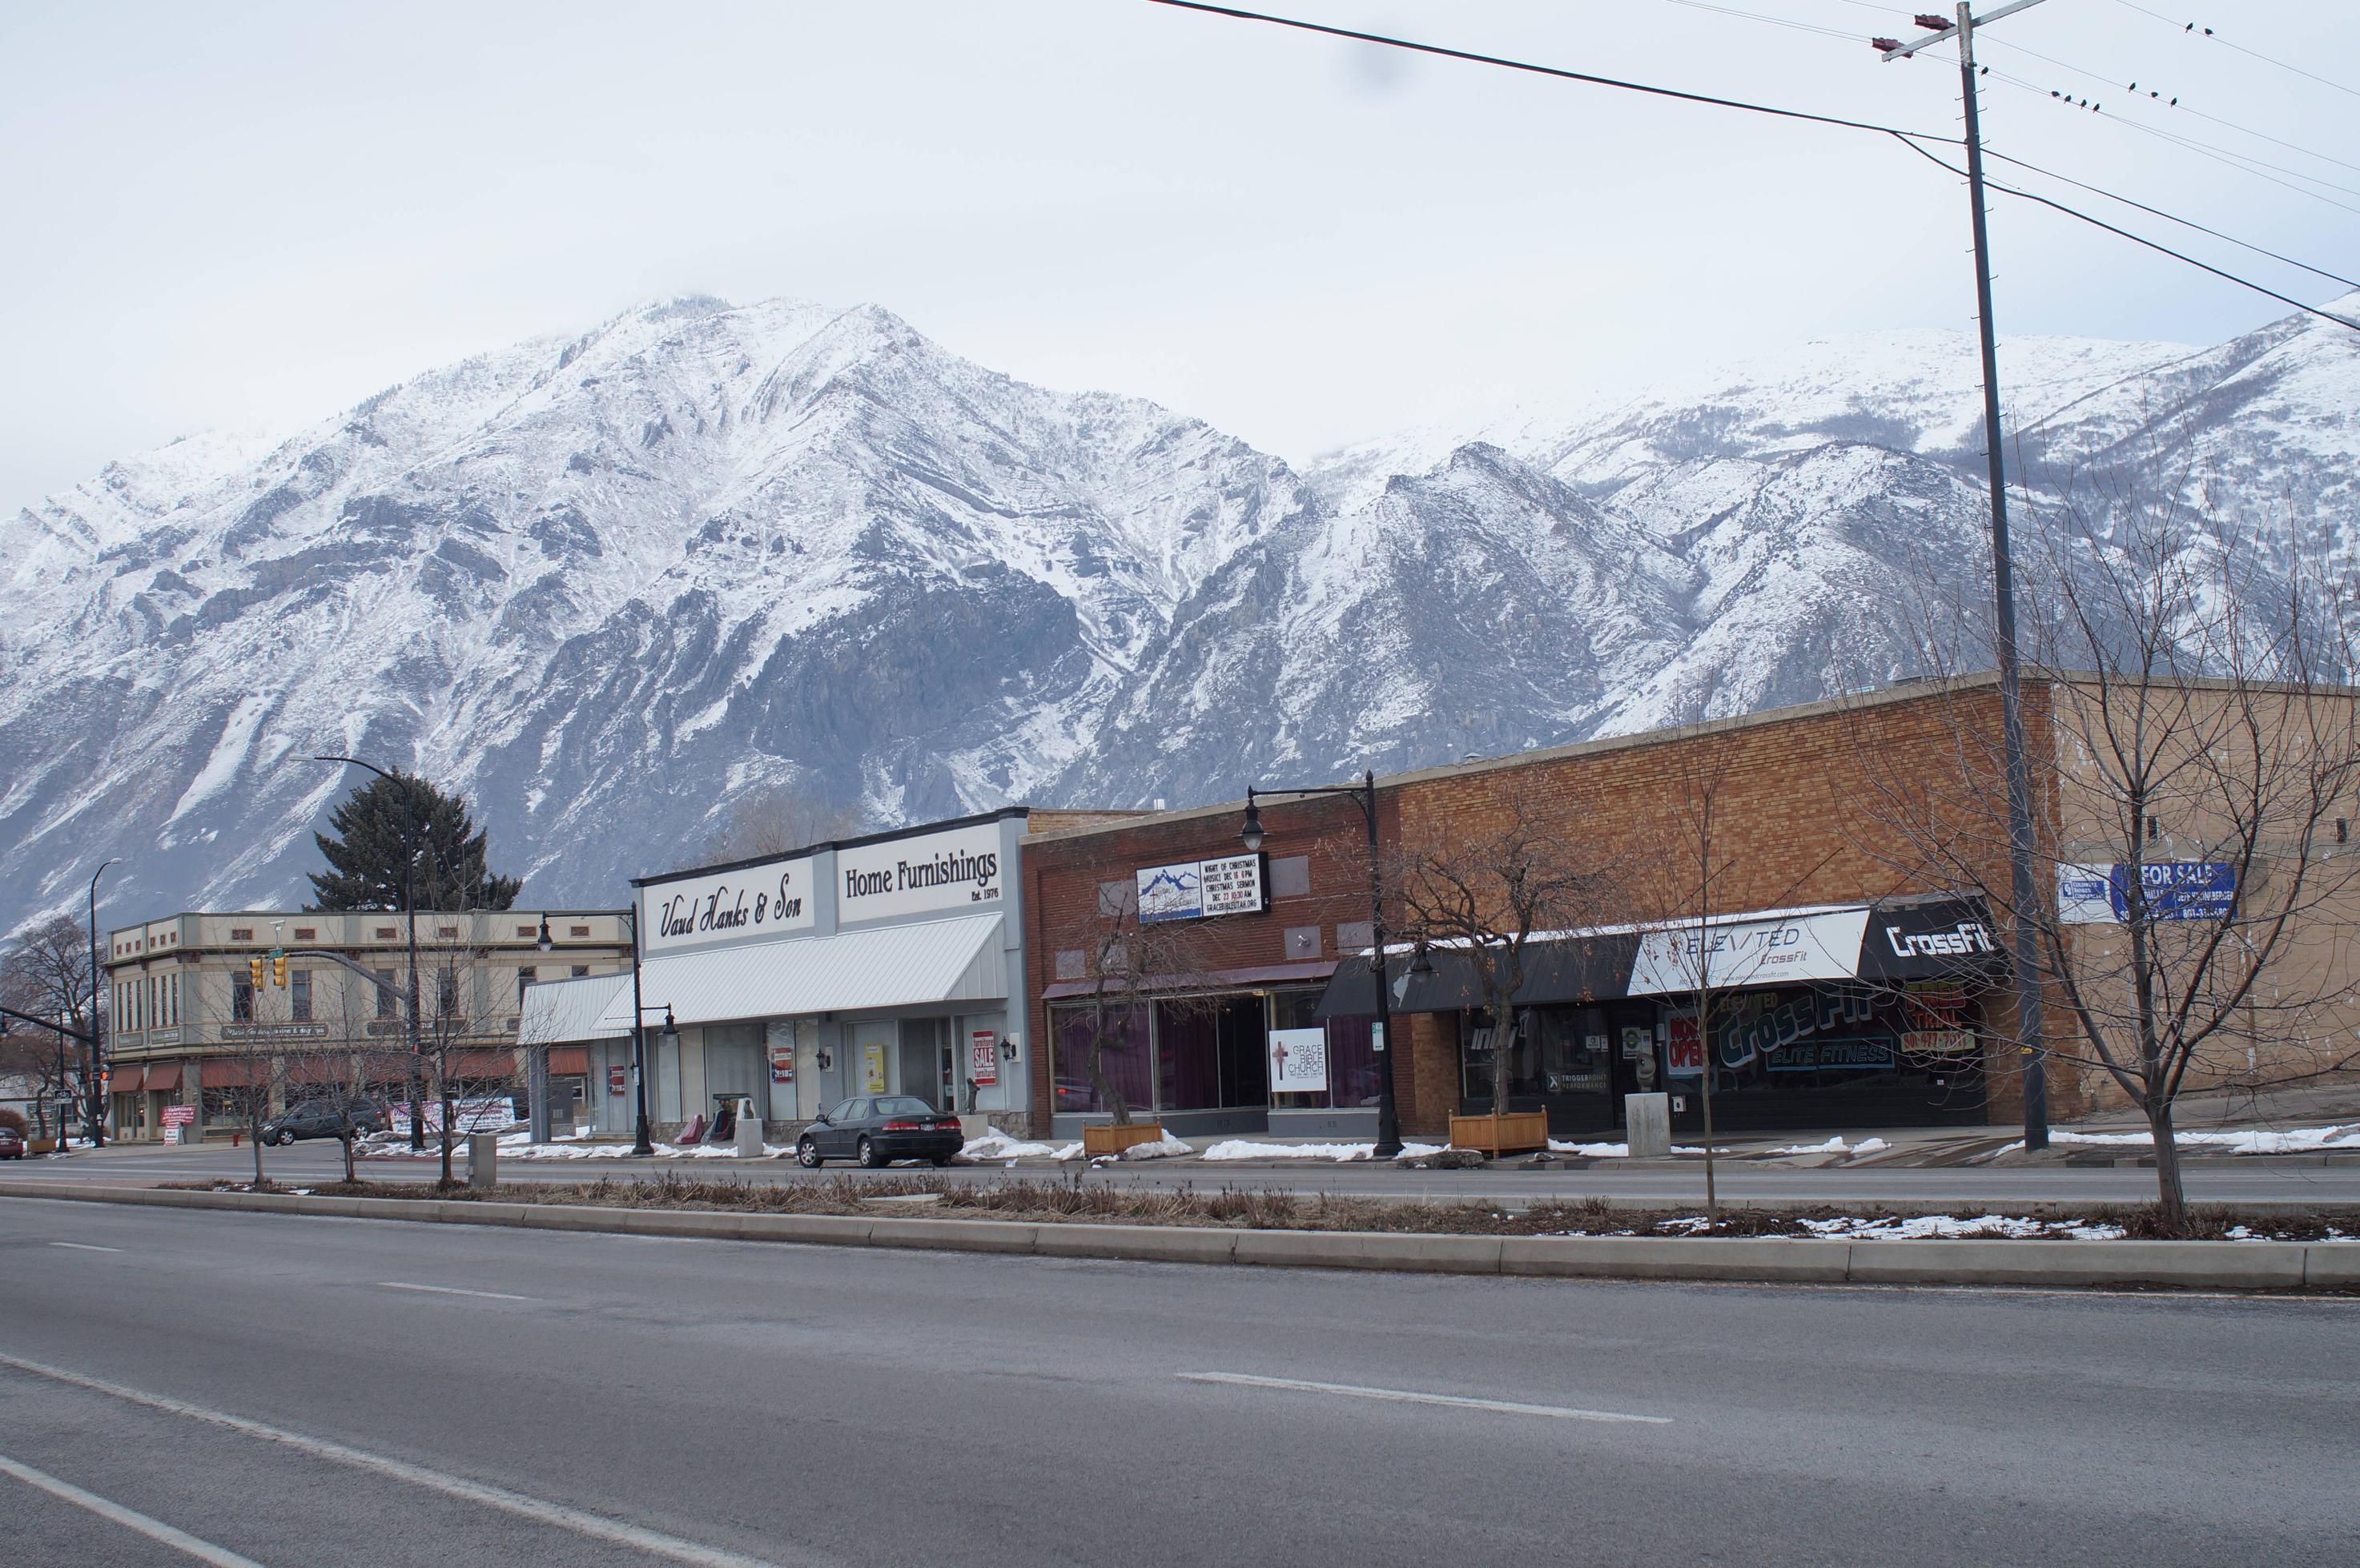 Springville Utah Main Street with mountain